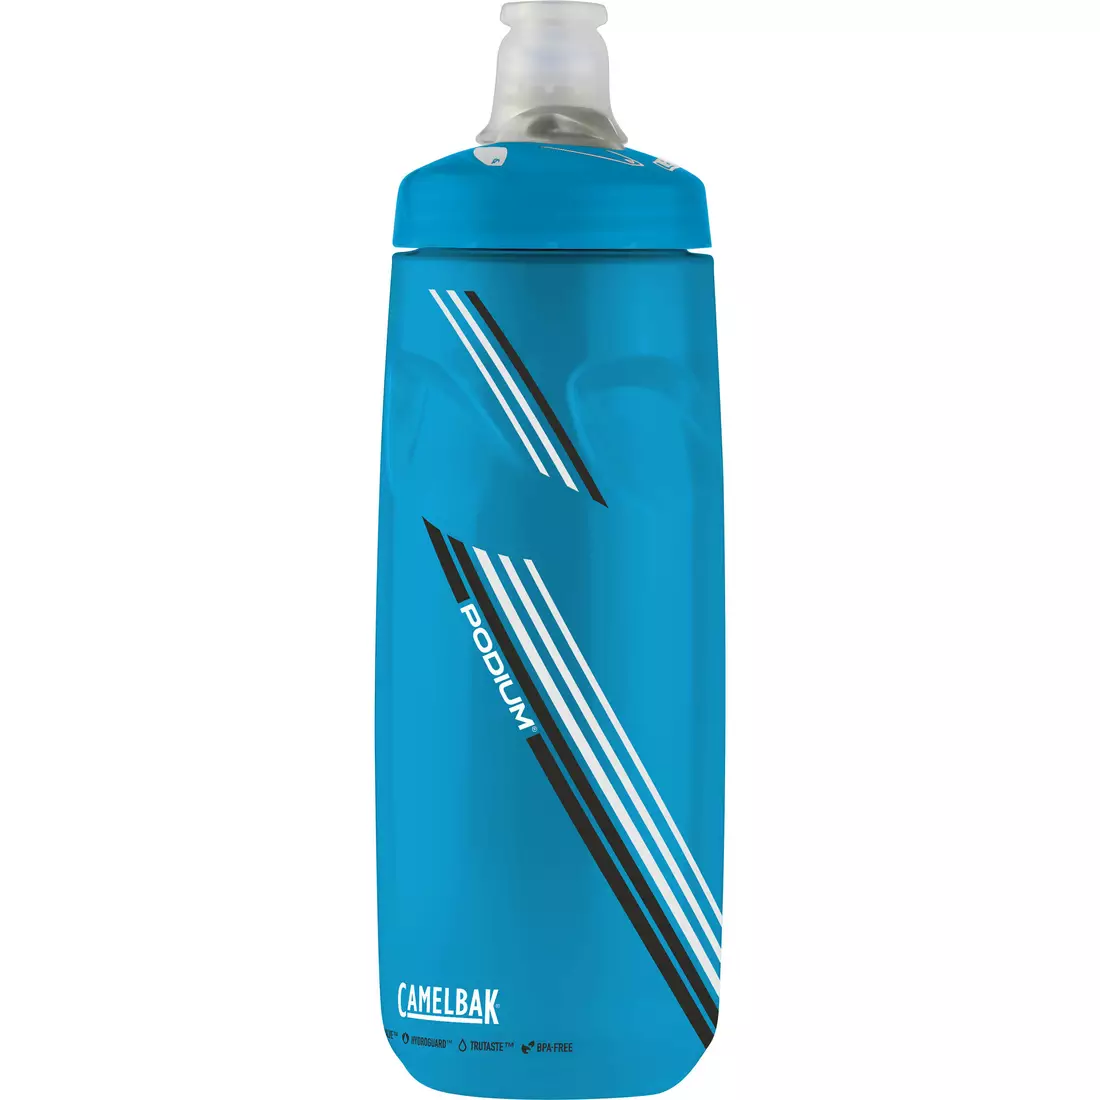 Camelbak SS17 Podium bicycle water bottle 24oz/ 710 ml Breakaway Blue